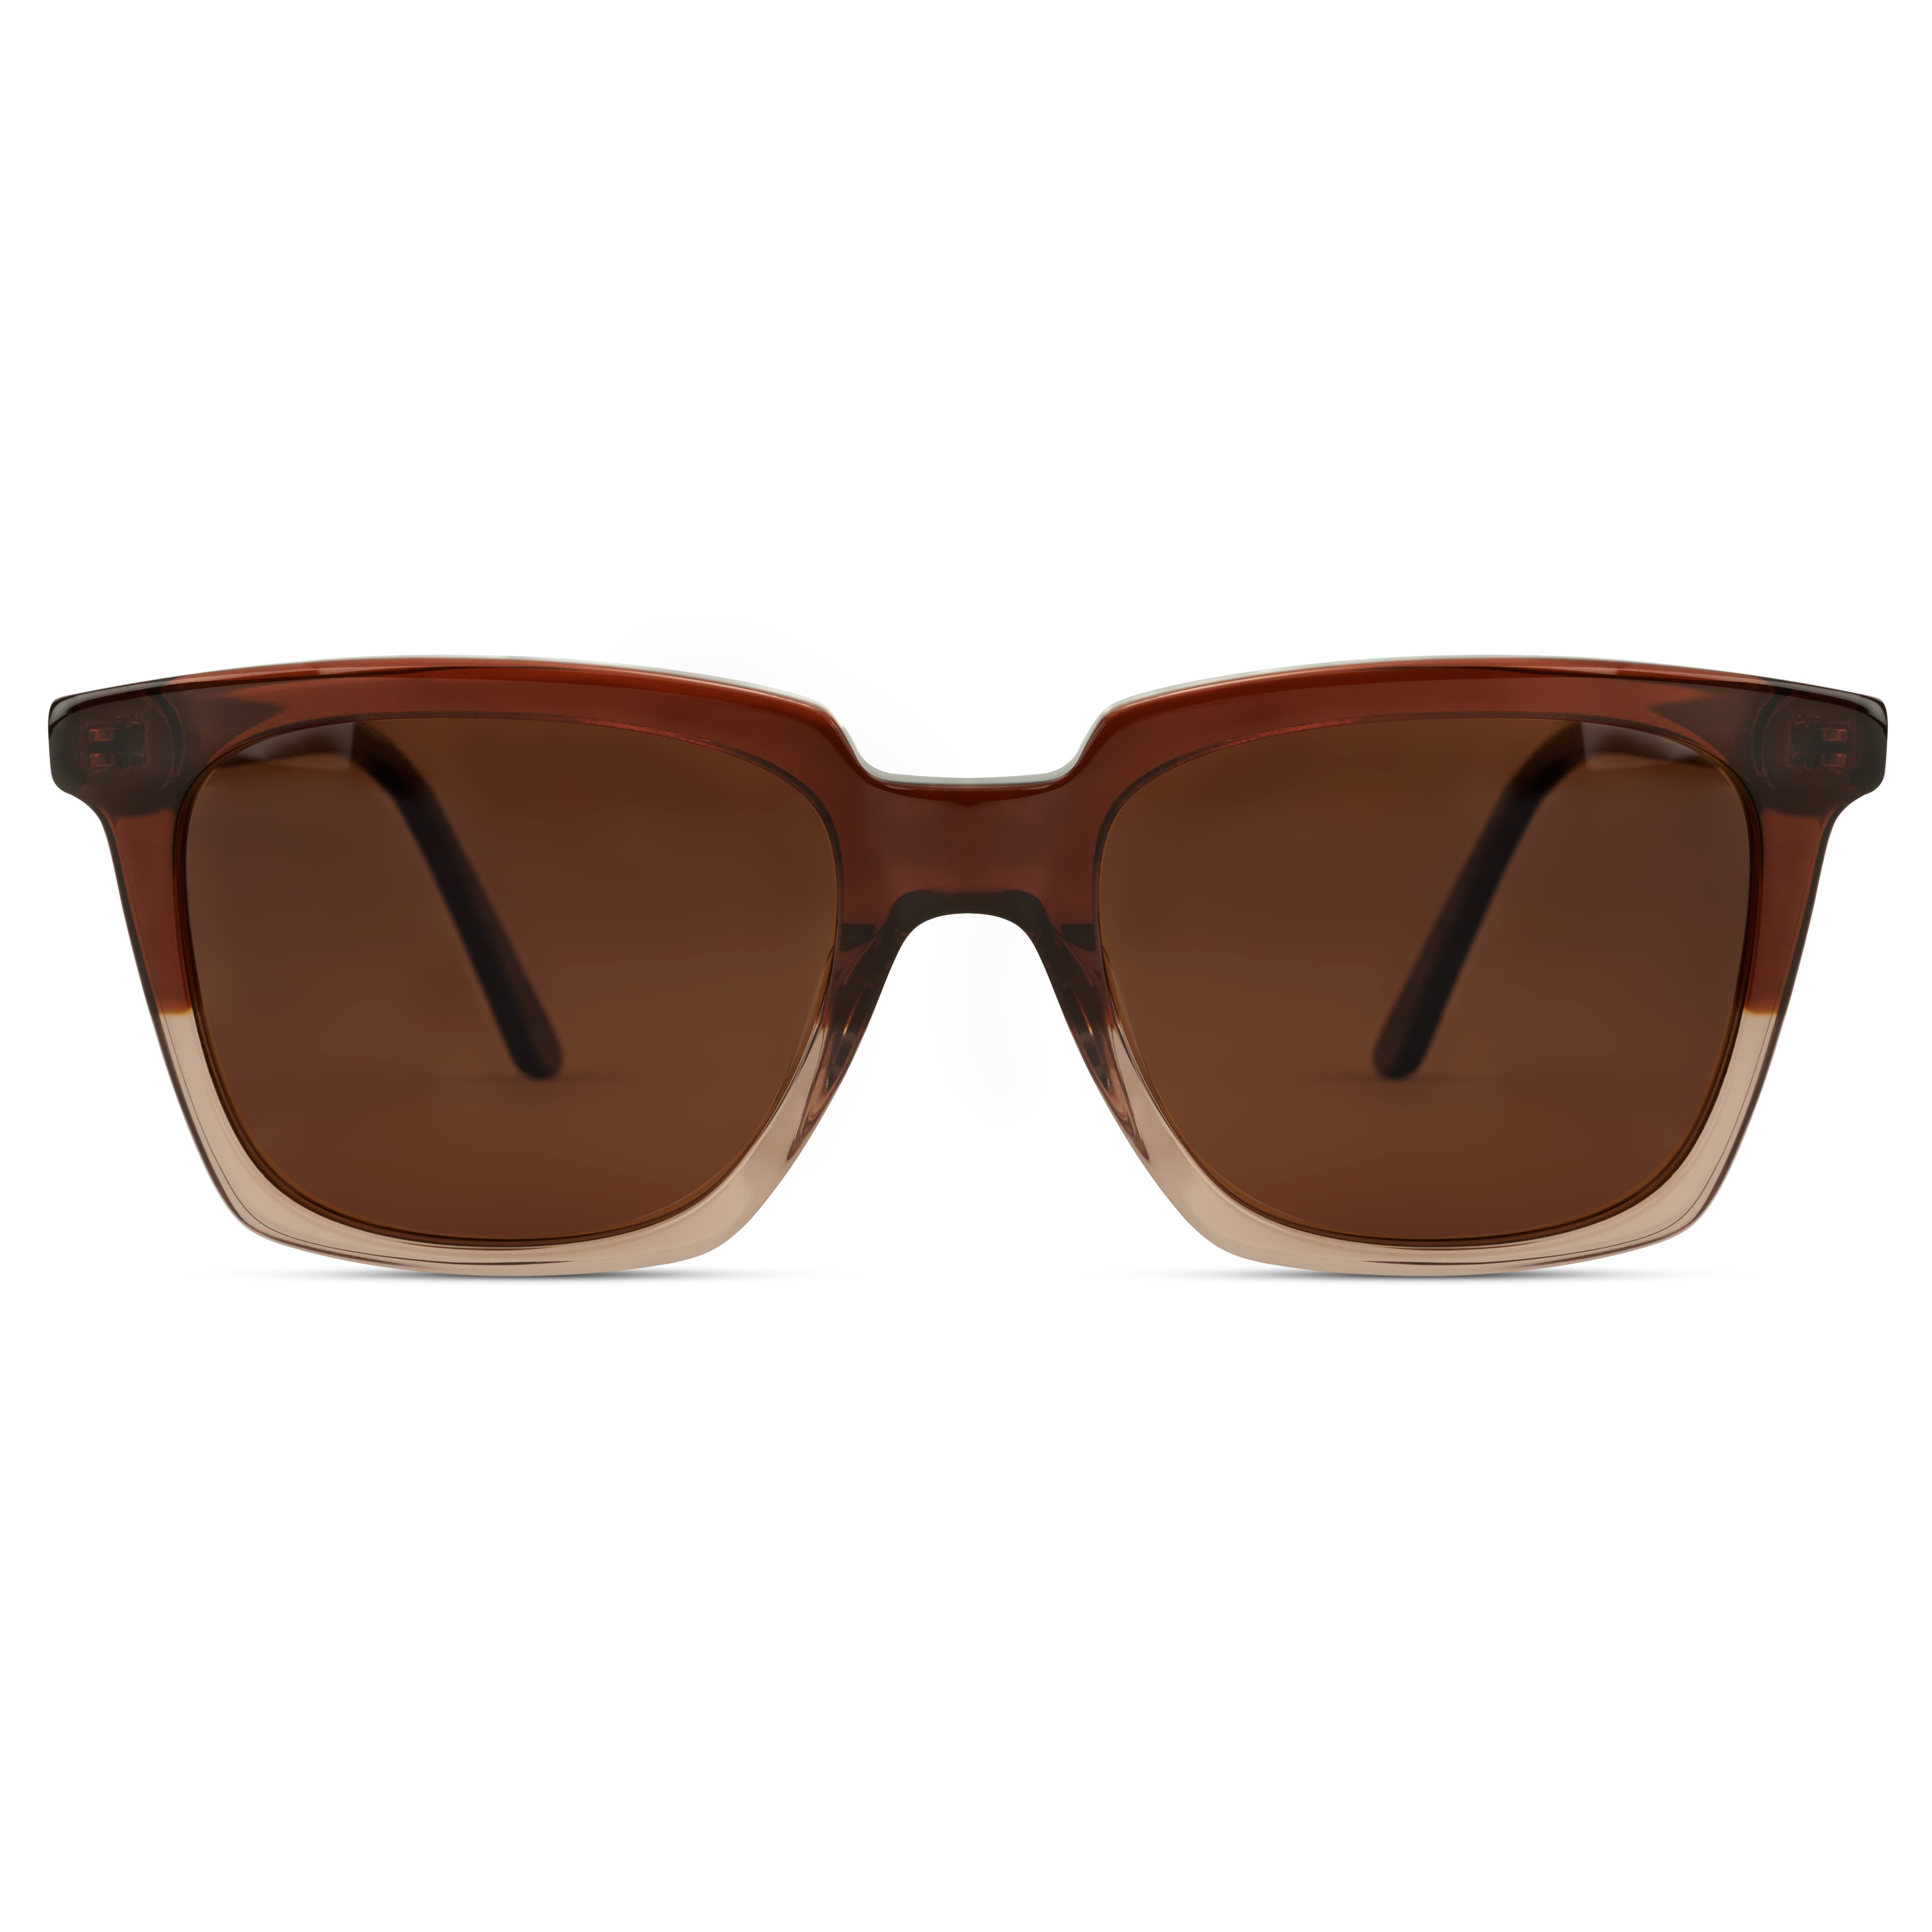 Occasus | Tofarvede Brune Polariserede Solbriller med Hornkant På | Arkai